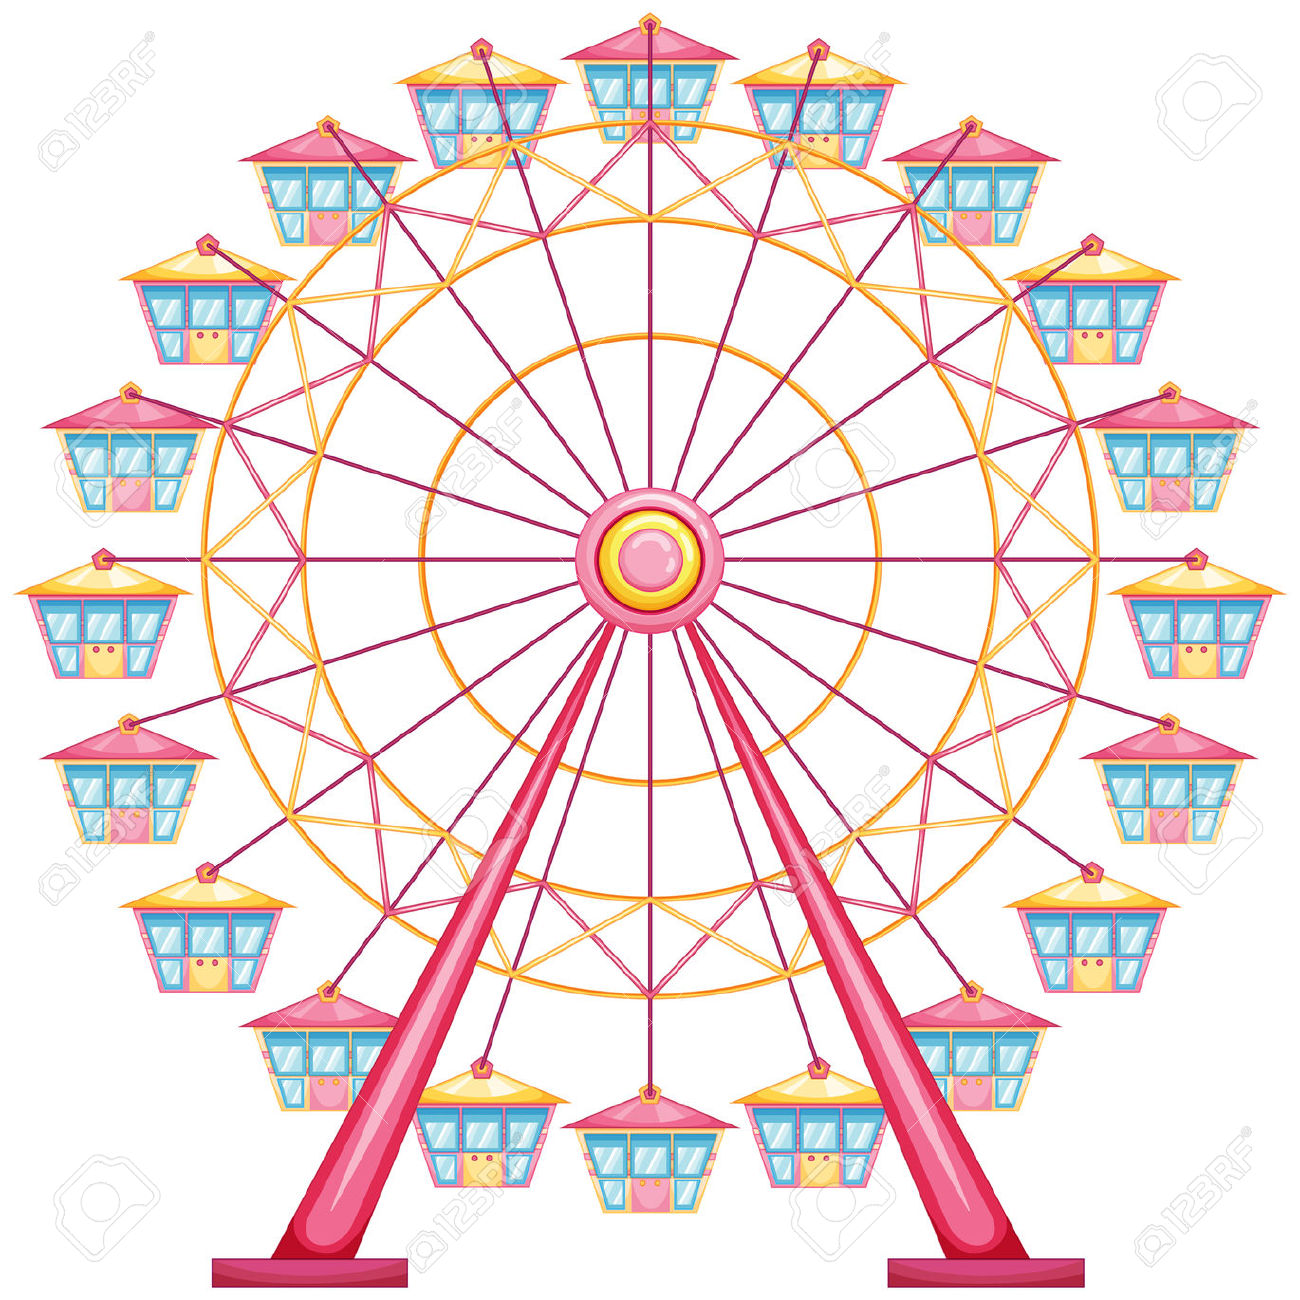 Ferris wheel clipart 2